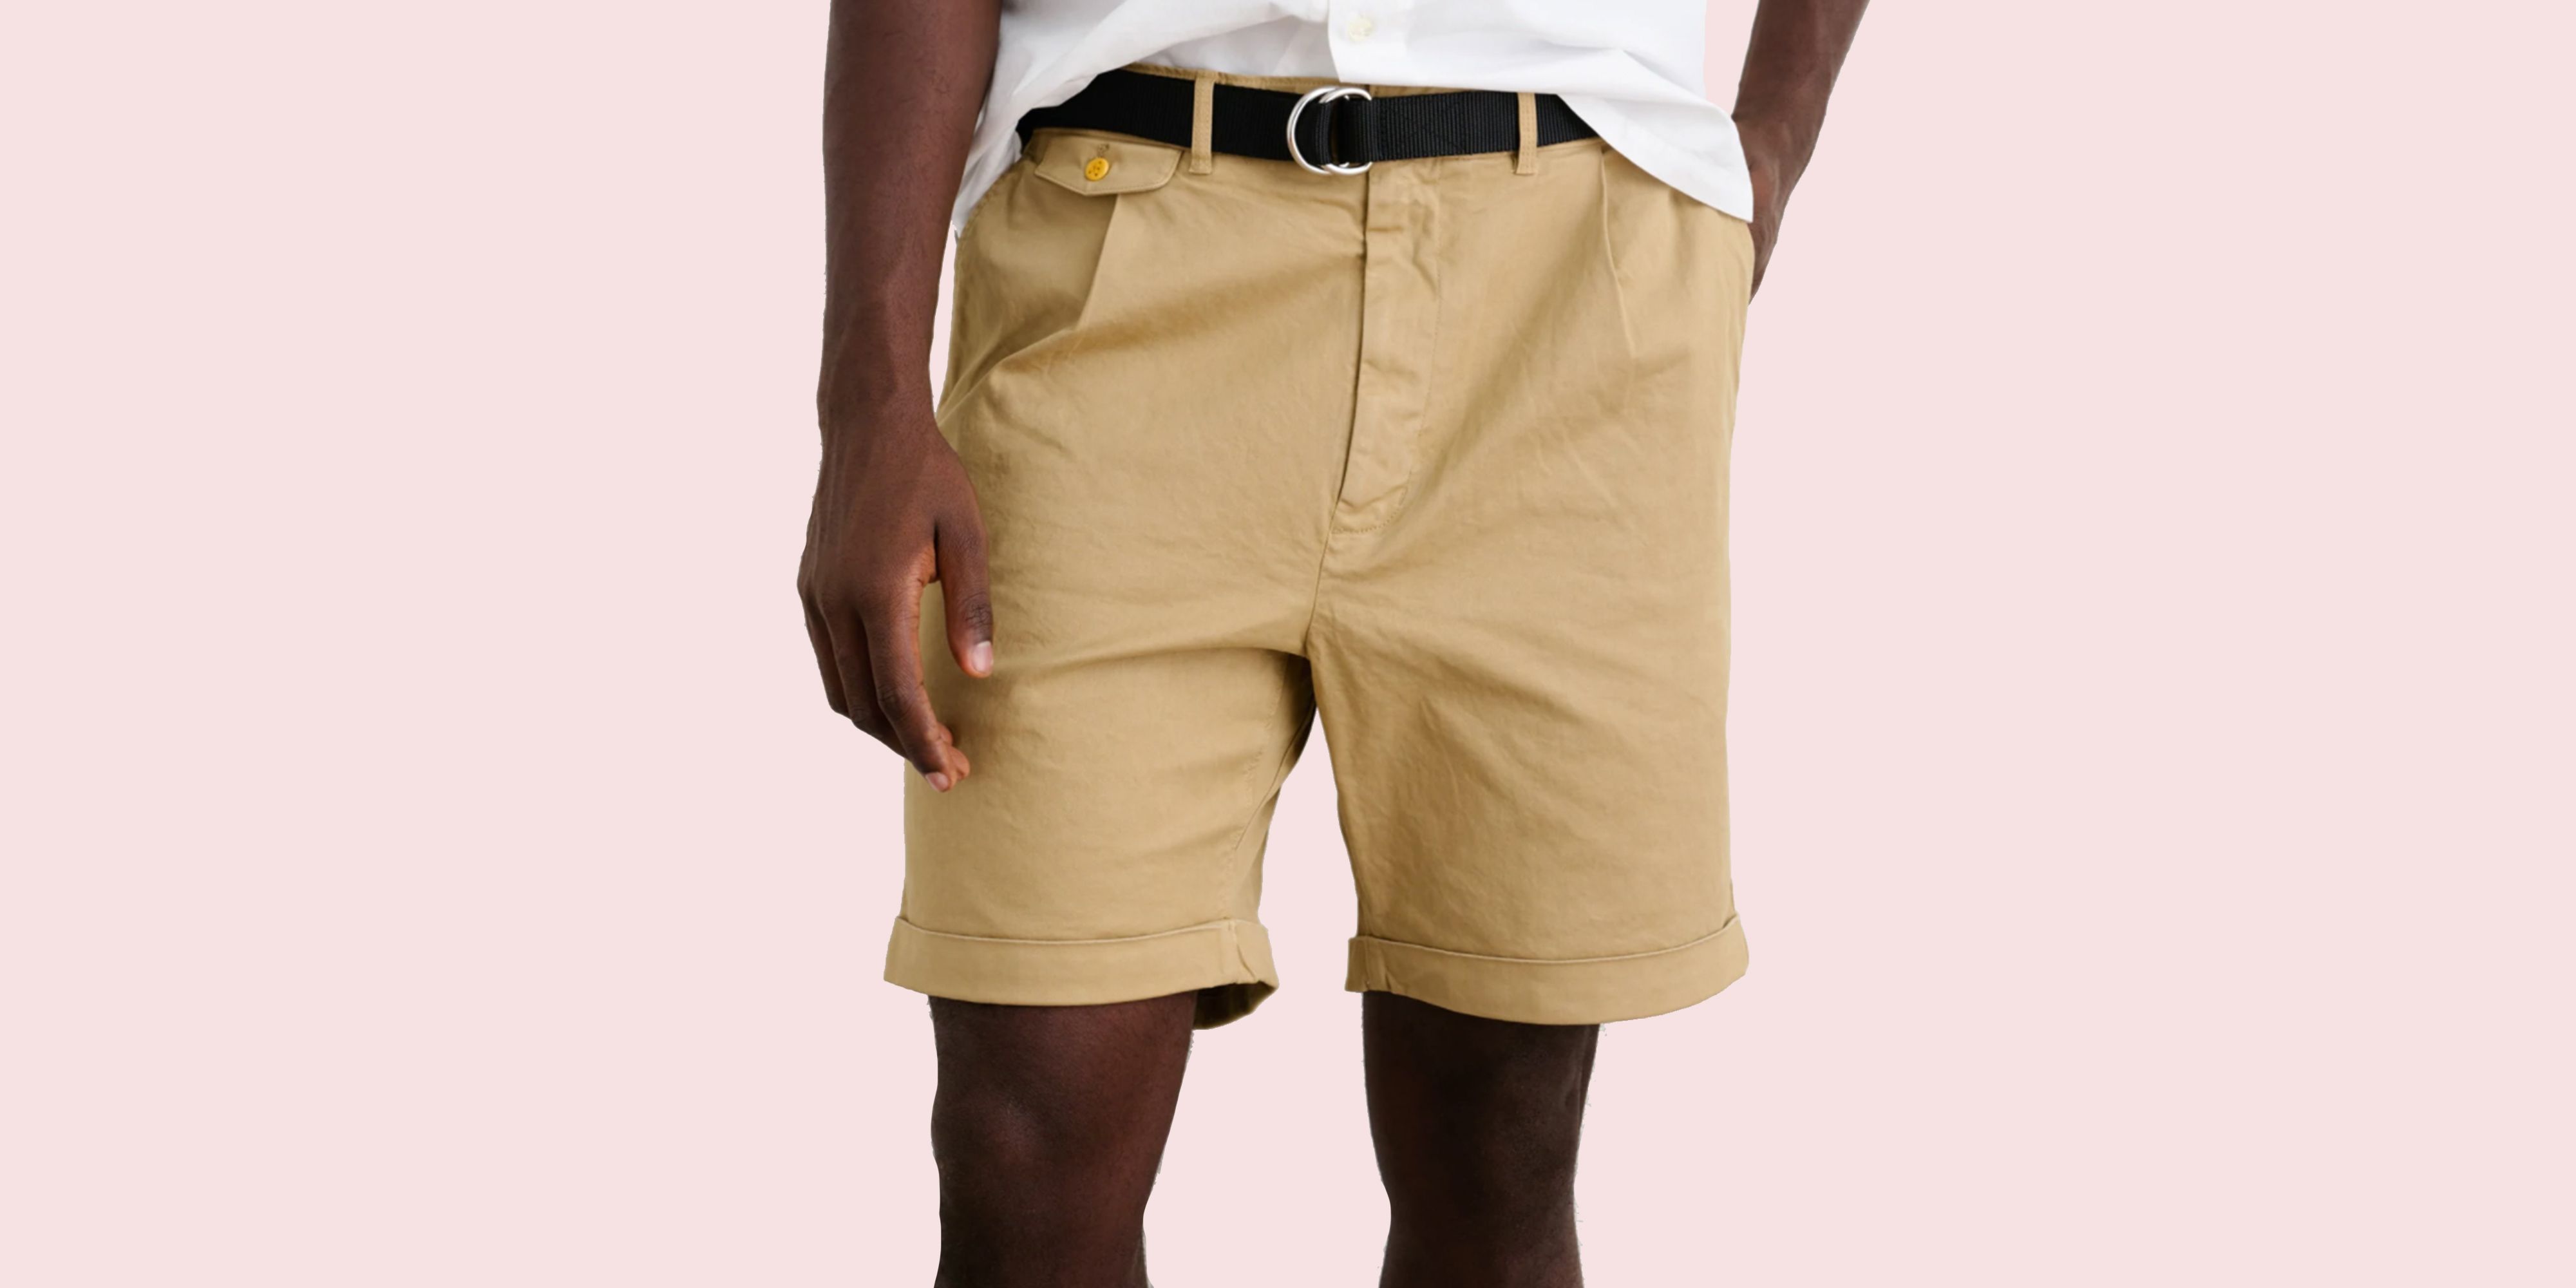 Deep Navy Garment Dyed Organic Cotton Chino Shorts